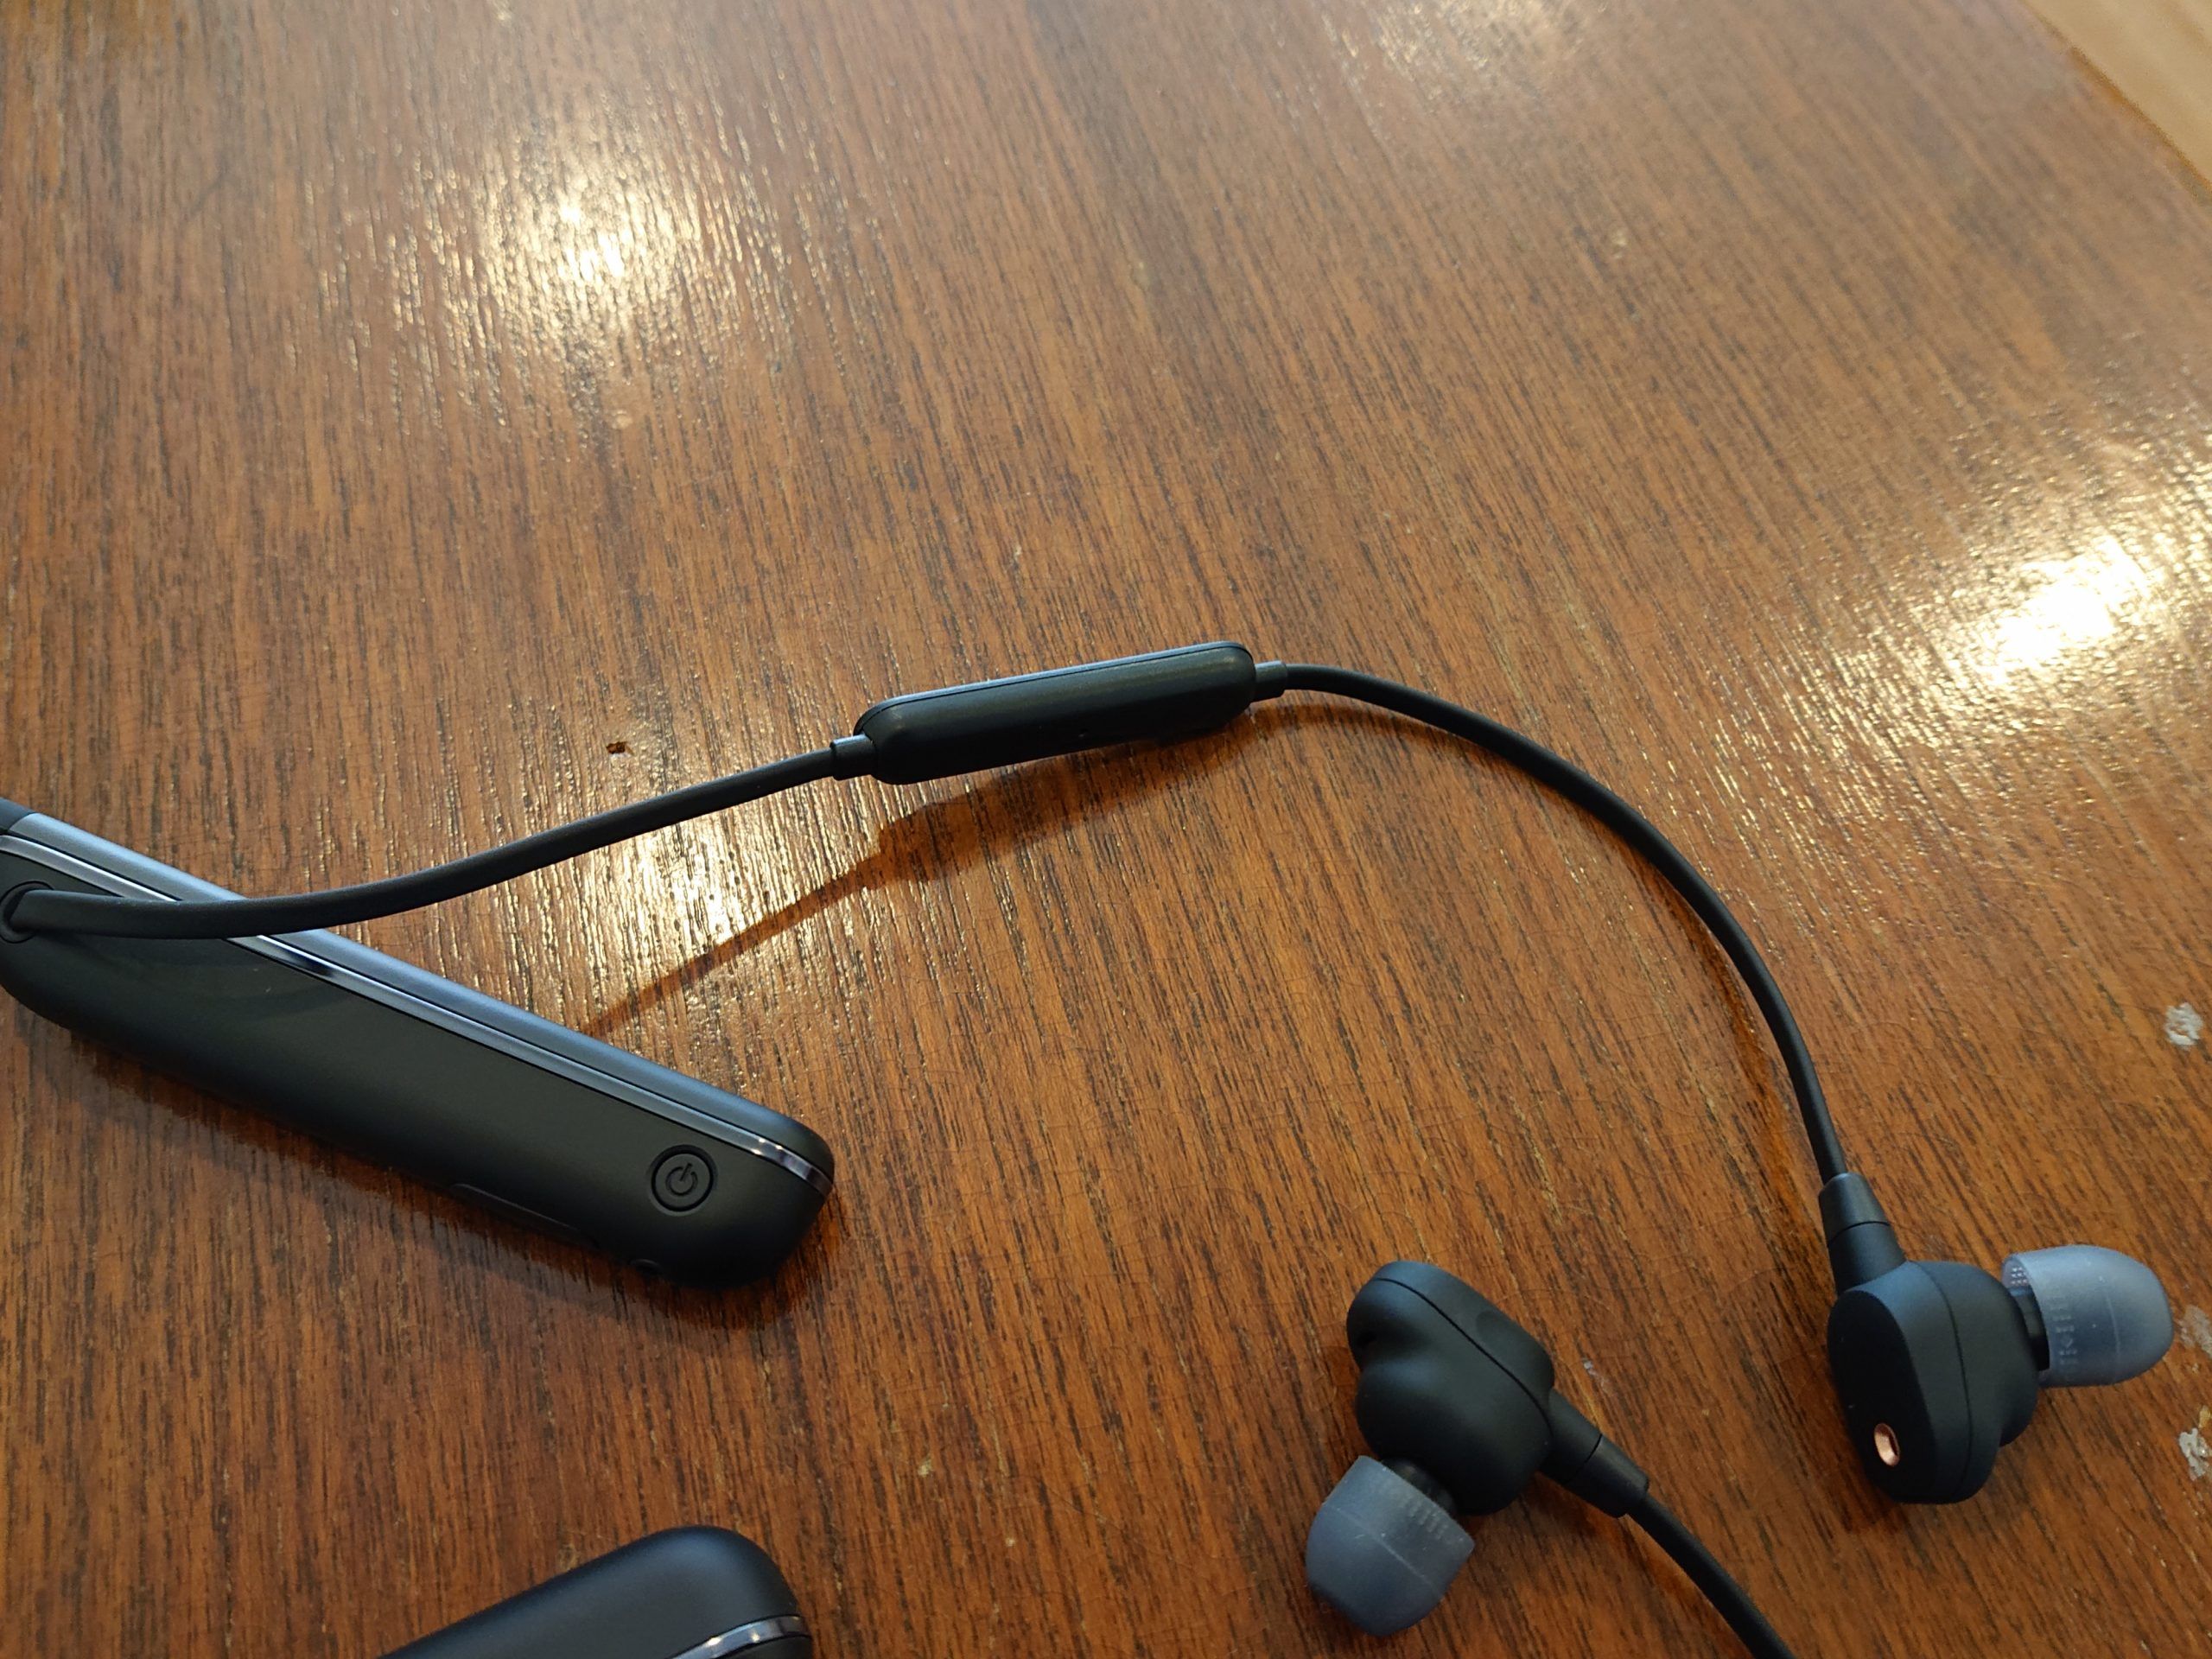 Review | Sony WI-1000XM2 Noise Canceling เหนือชั้น ระบบเสียงพัฒนาขึ้น และดีไซน์ที่แก้ปัญหาจากรุ่นก่อน